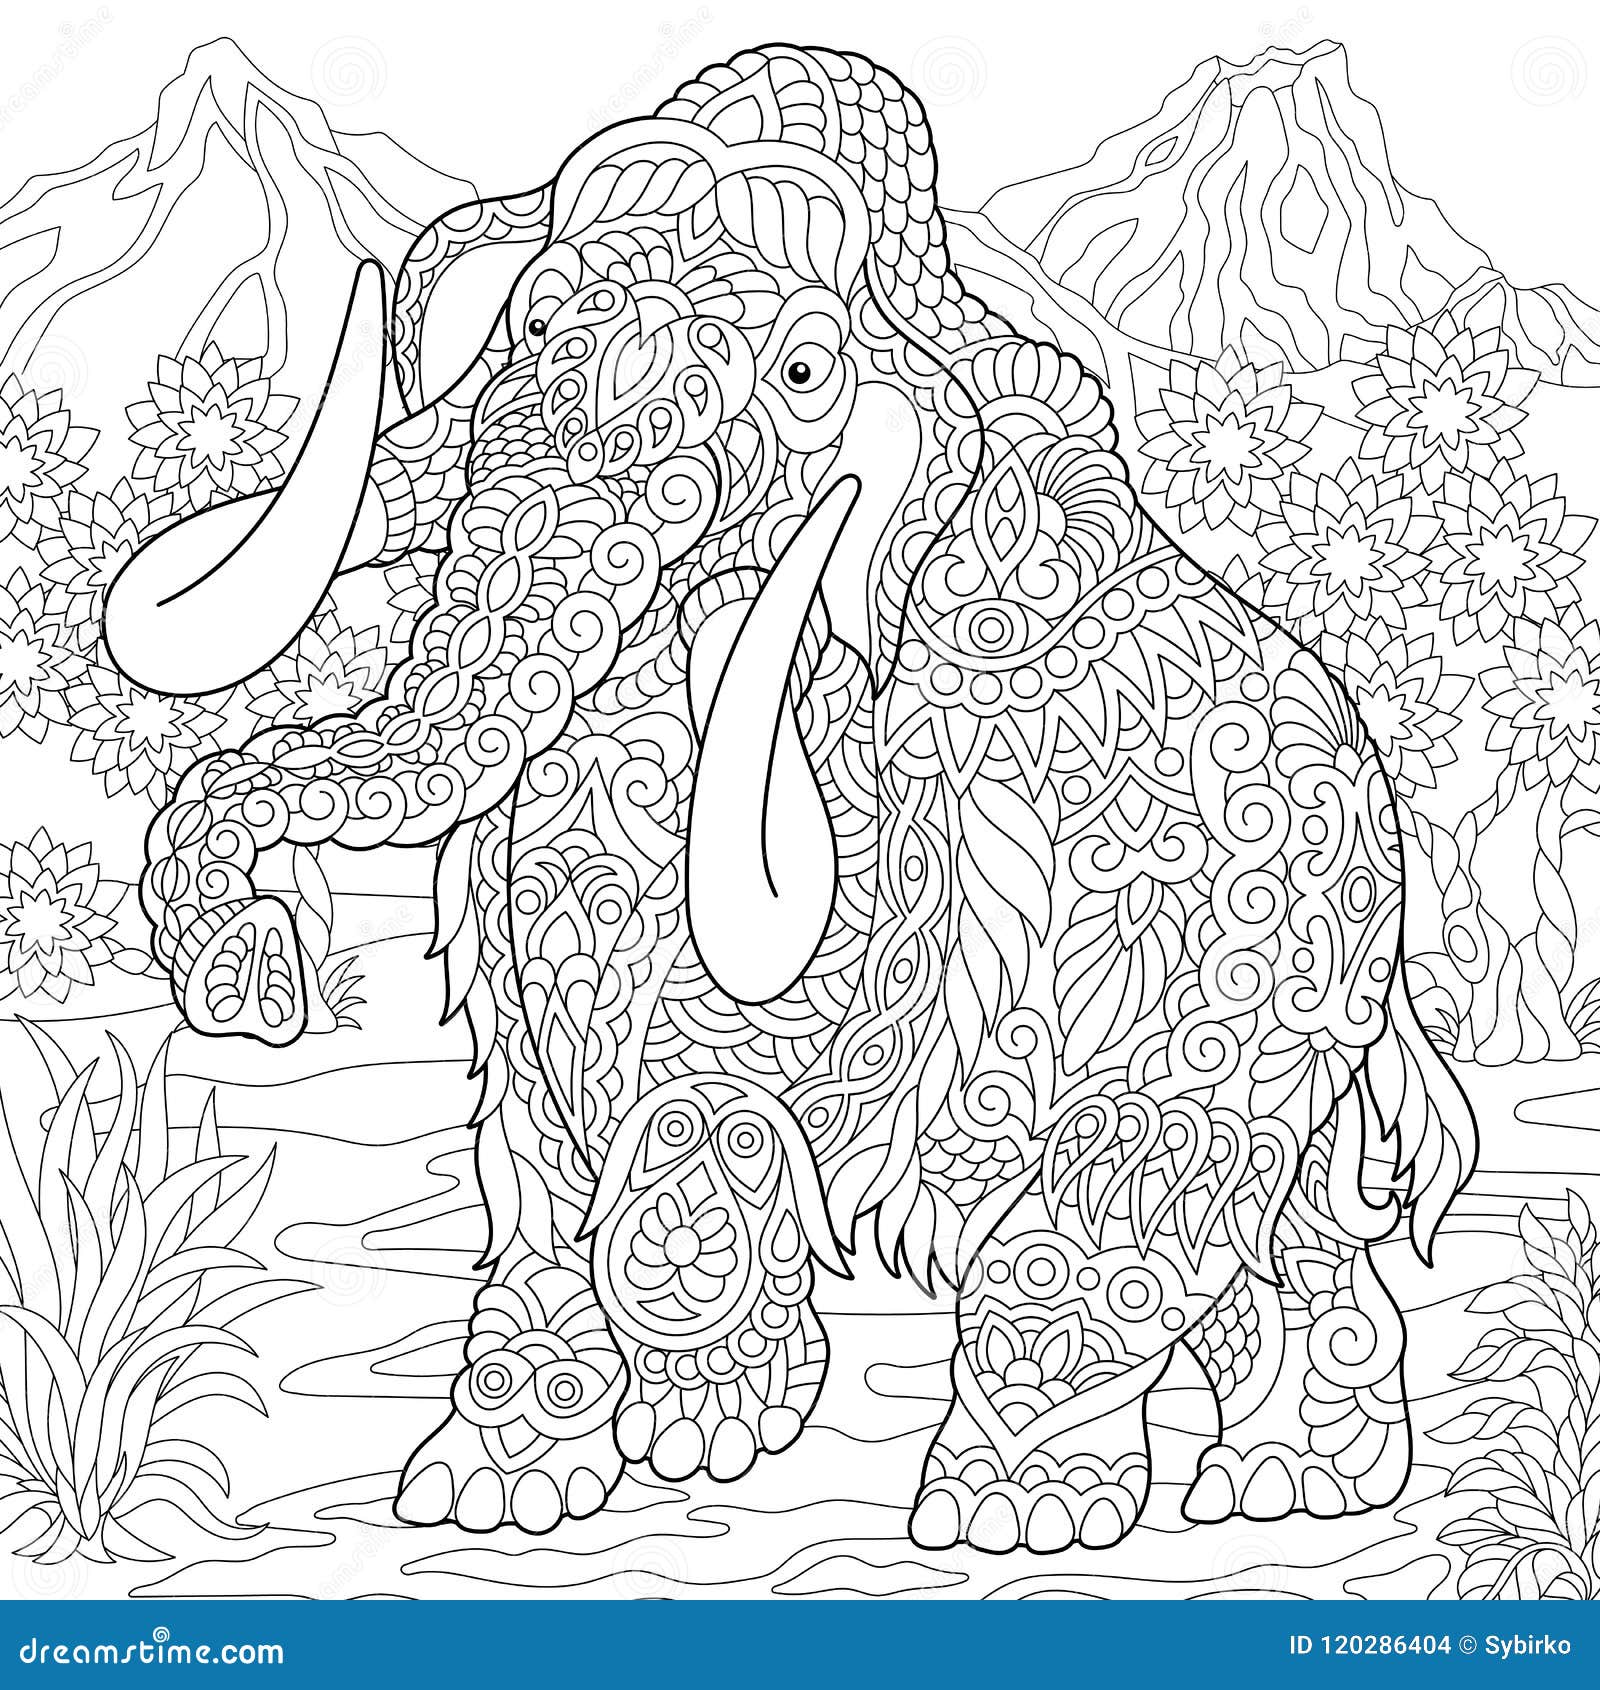 Download Zentangle mammoth elephant stock vector. Illustration of extinct - 120286404